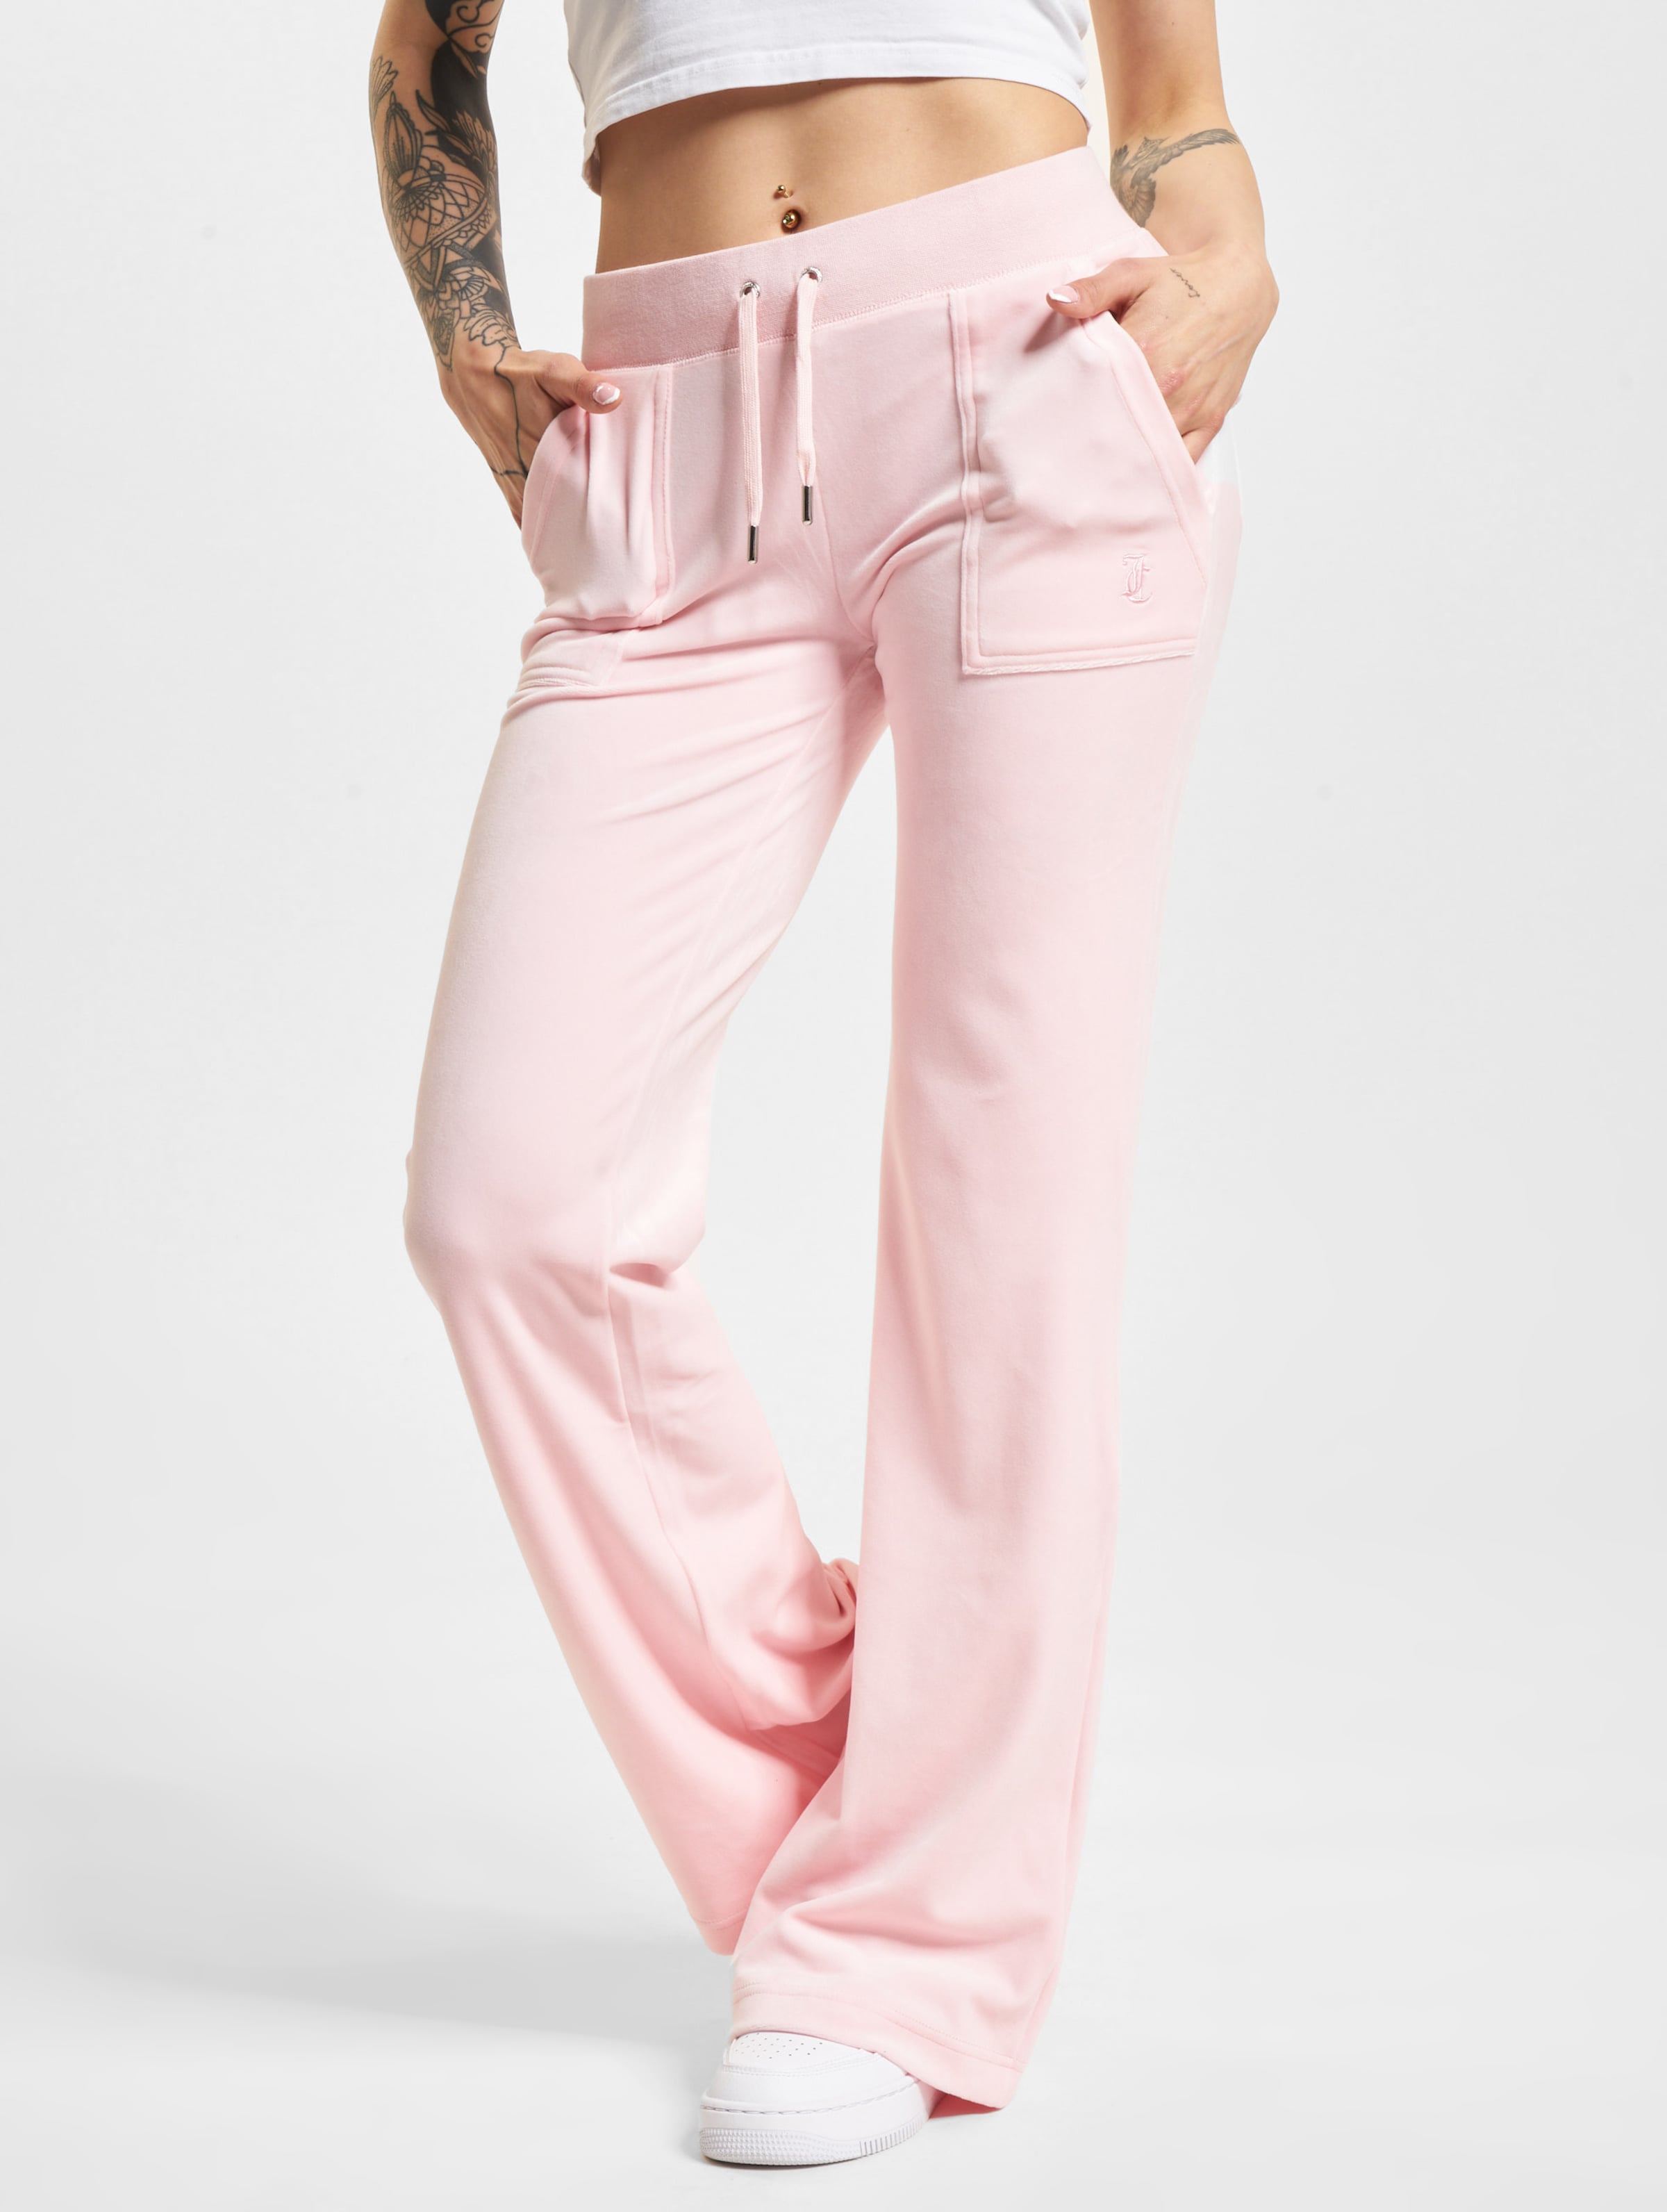 Juicy Couture Layla Pocket Low Rise Jogginghosen Frauen,Unisex op kleur roze, Maat S